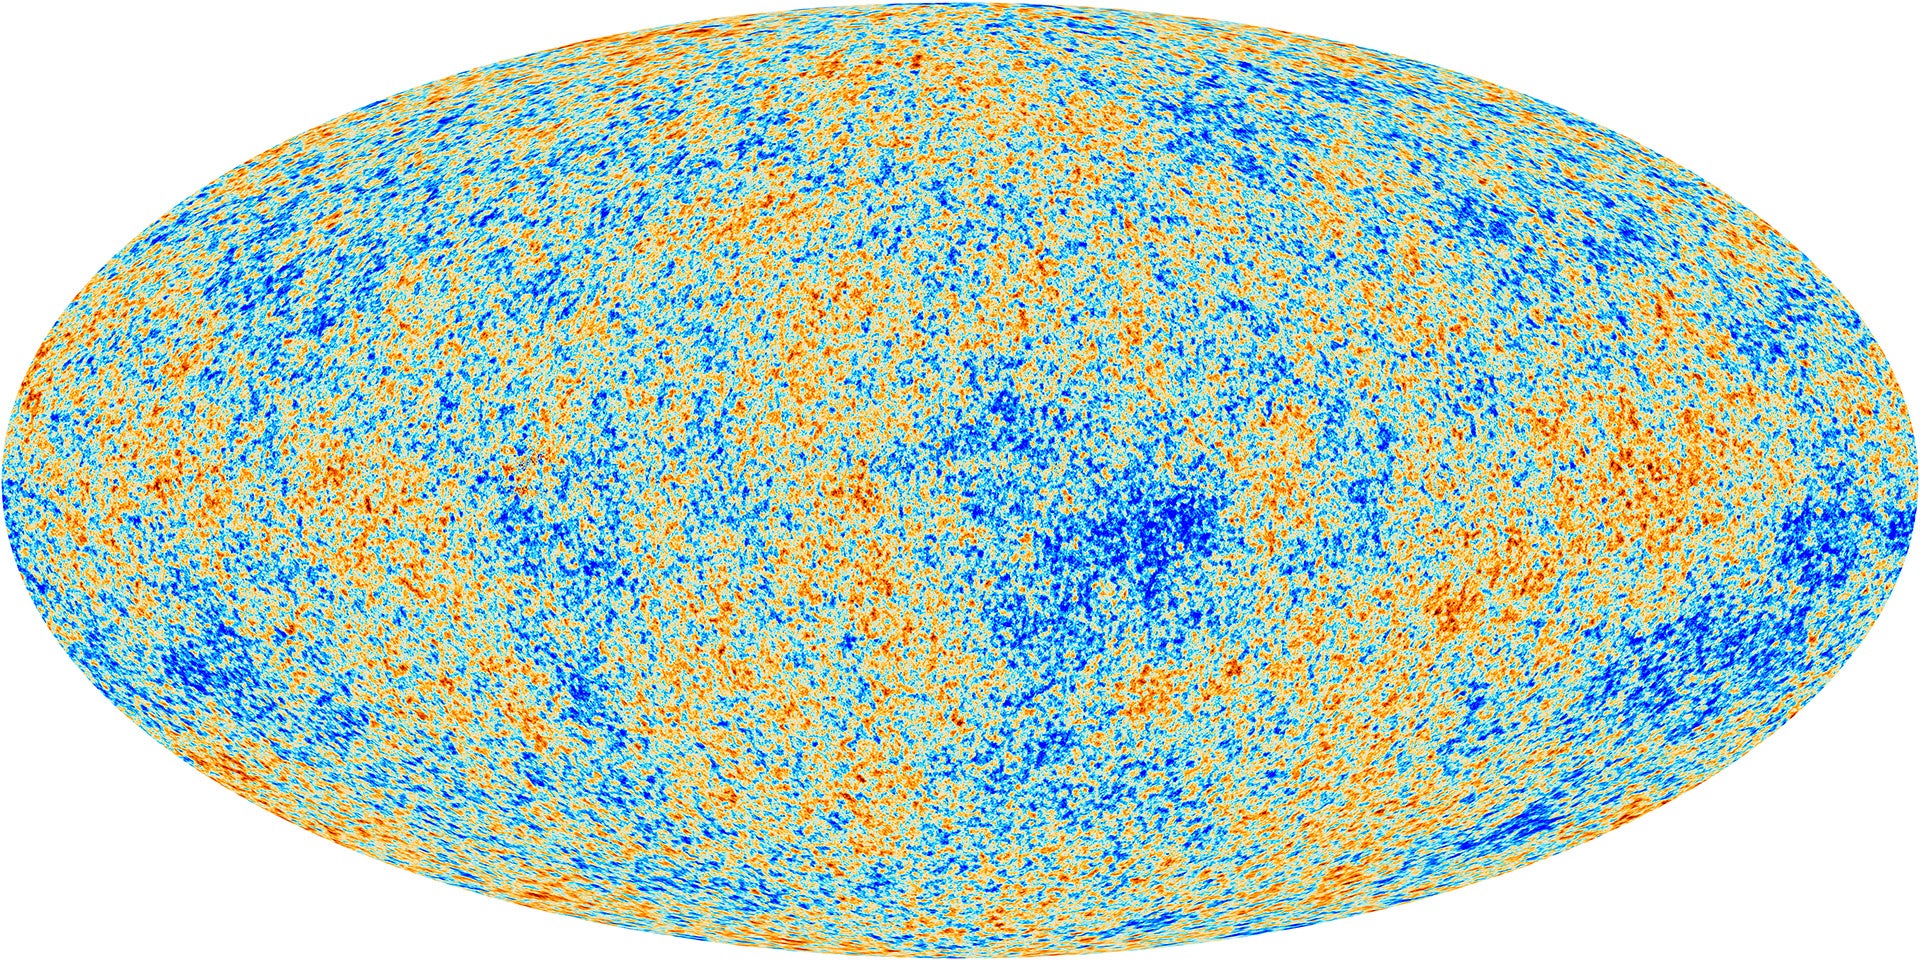 New Map of Dark Matter Validates Einstein’s Theory of Gravity